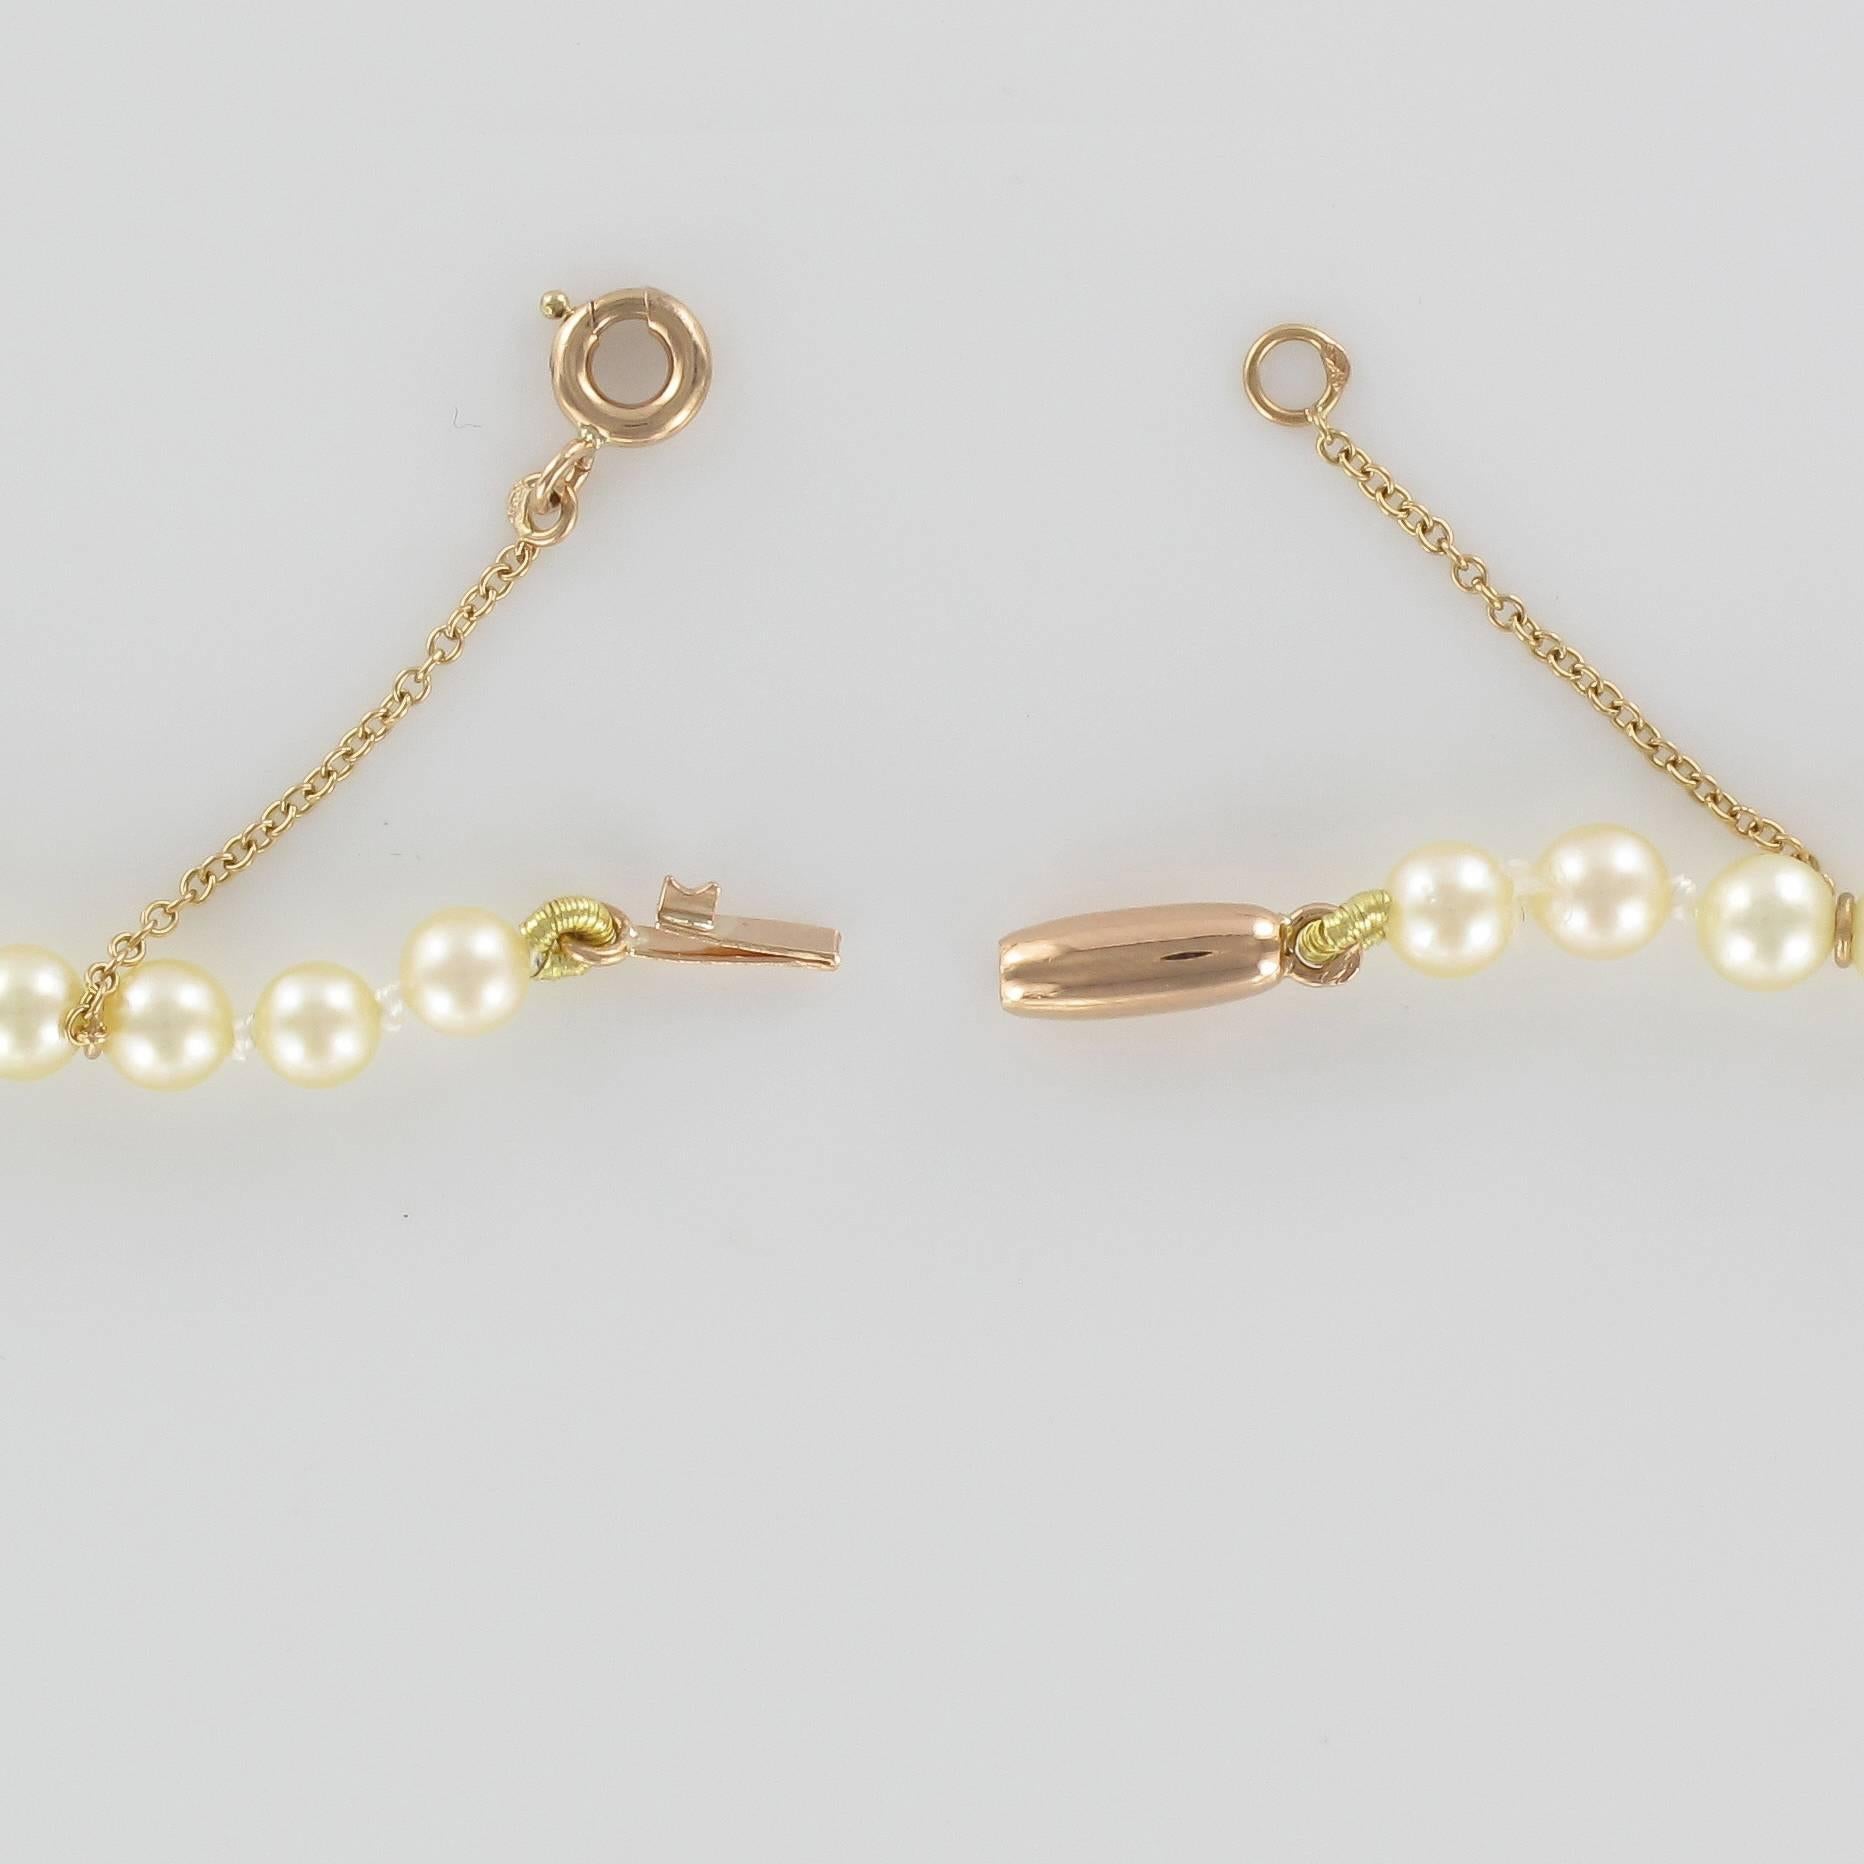 1950s mikimoto pearl necklace